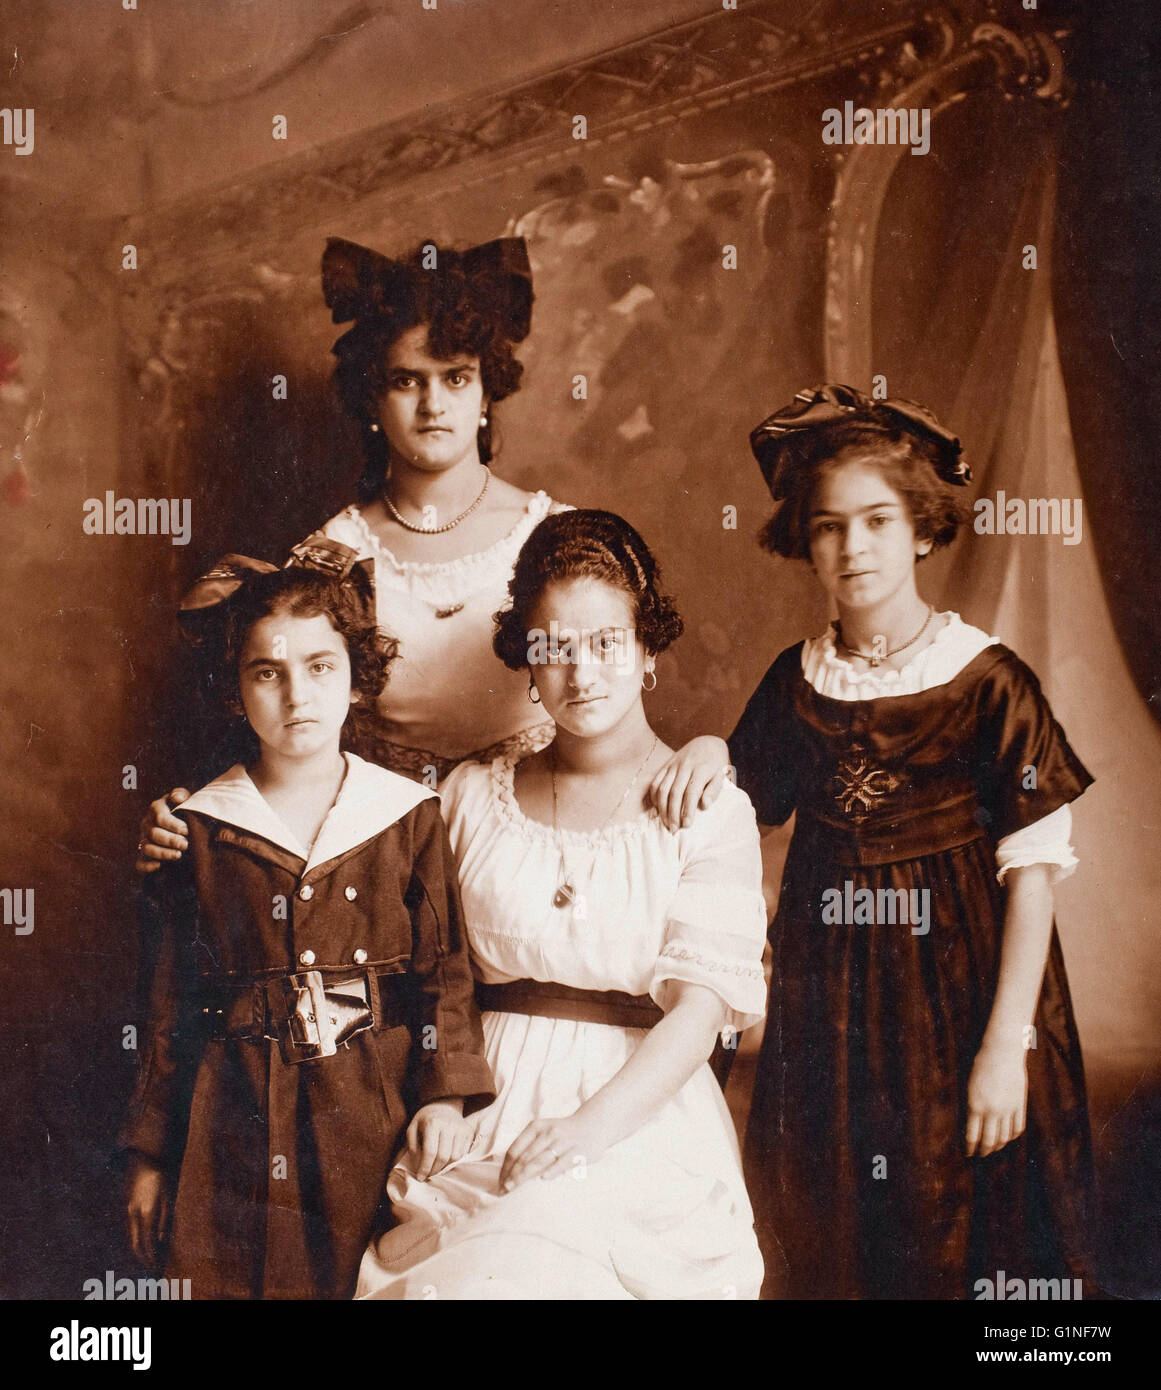 Guillermo Kahlo - Matilde, Adriana, Frida and Cristina Kahlo - Museo Frida Kahlo Stock Photo